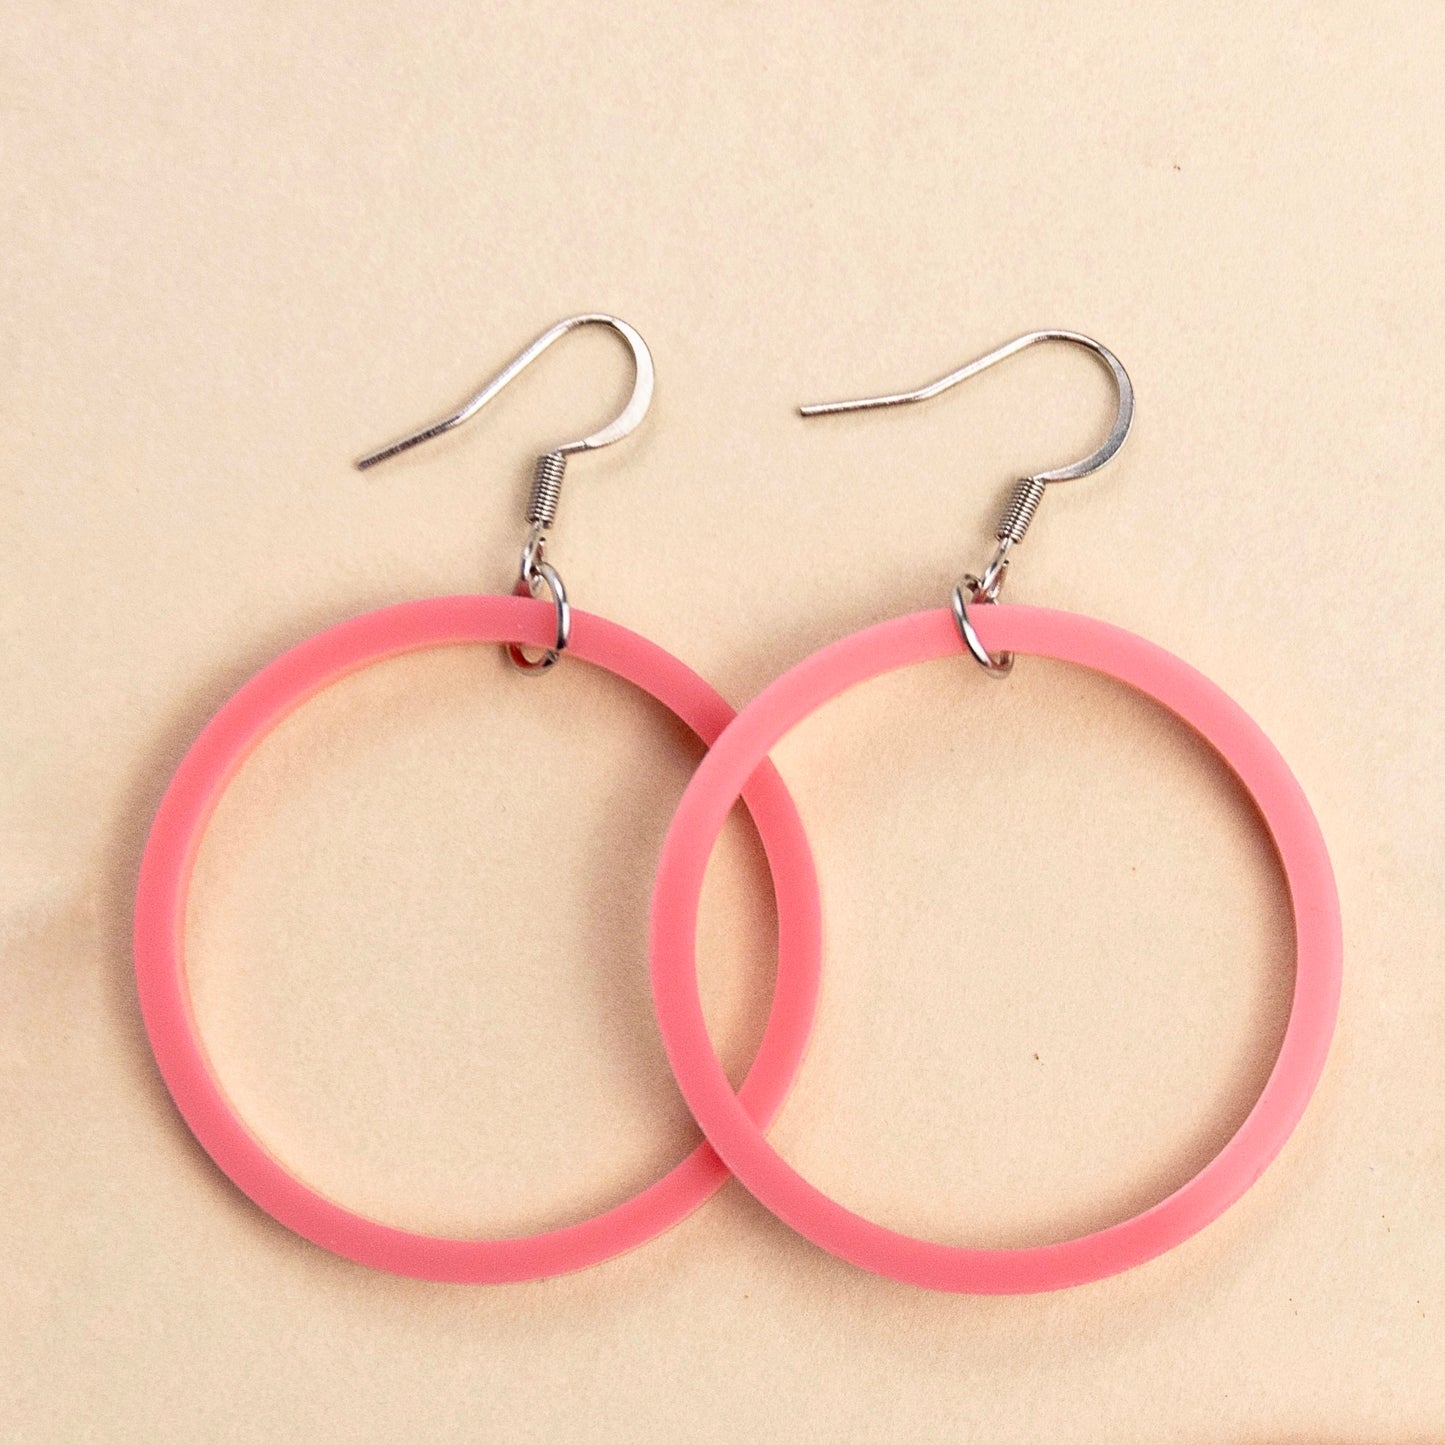 THE STAPLE HOOPS in Pink/ Lightweight Acrylic Statement Hoop Earrings